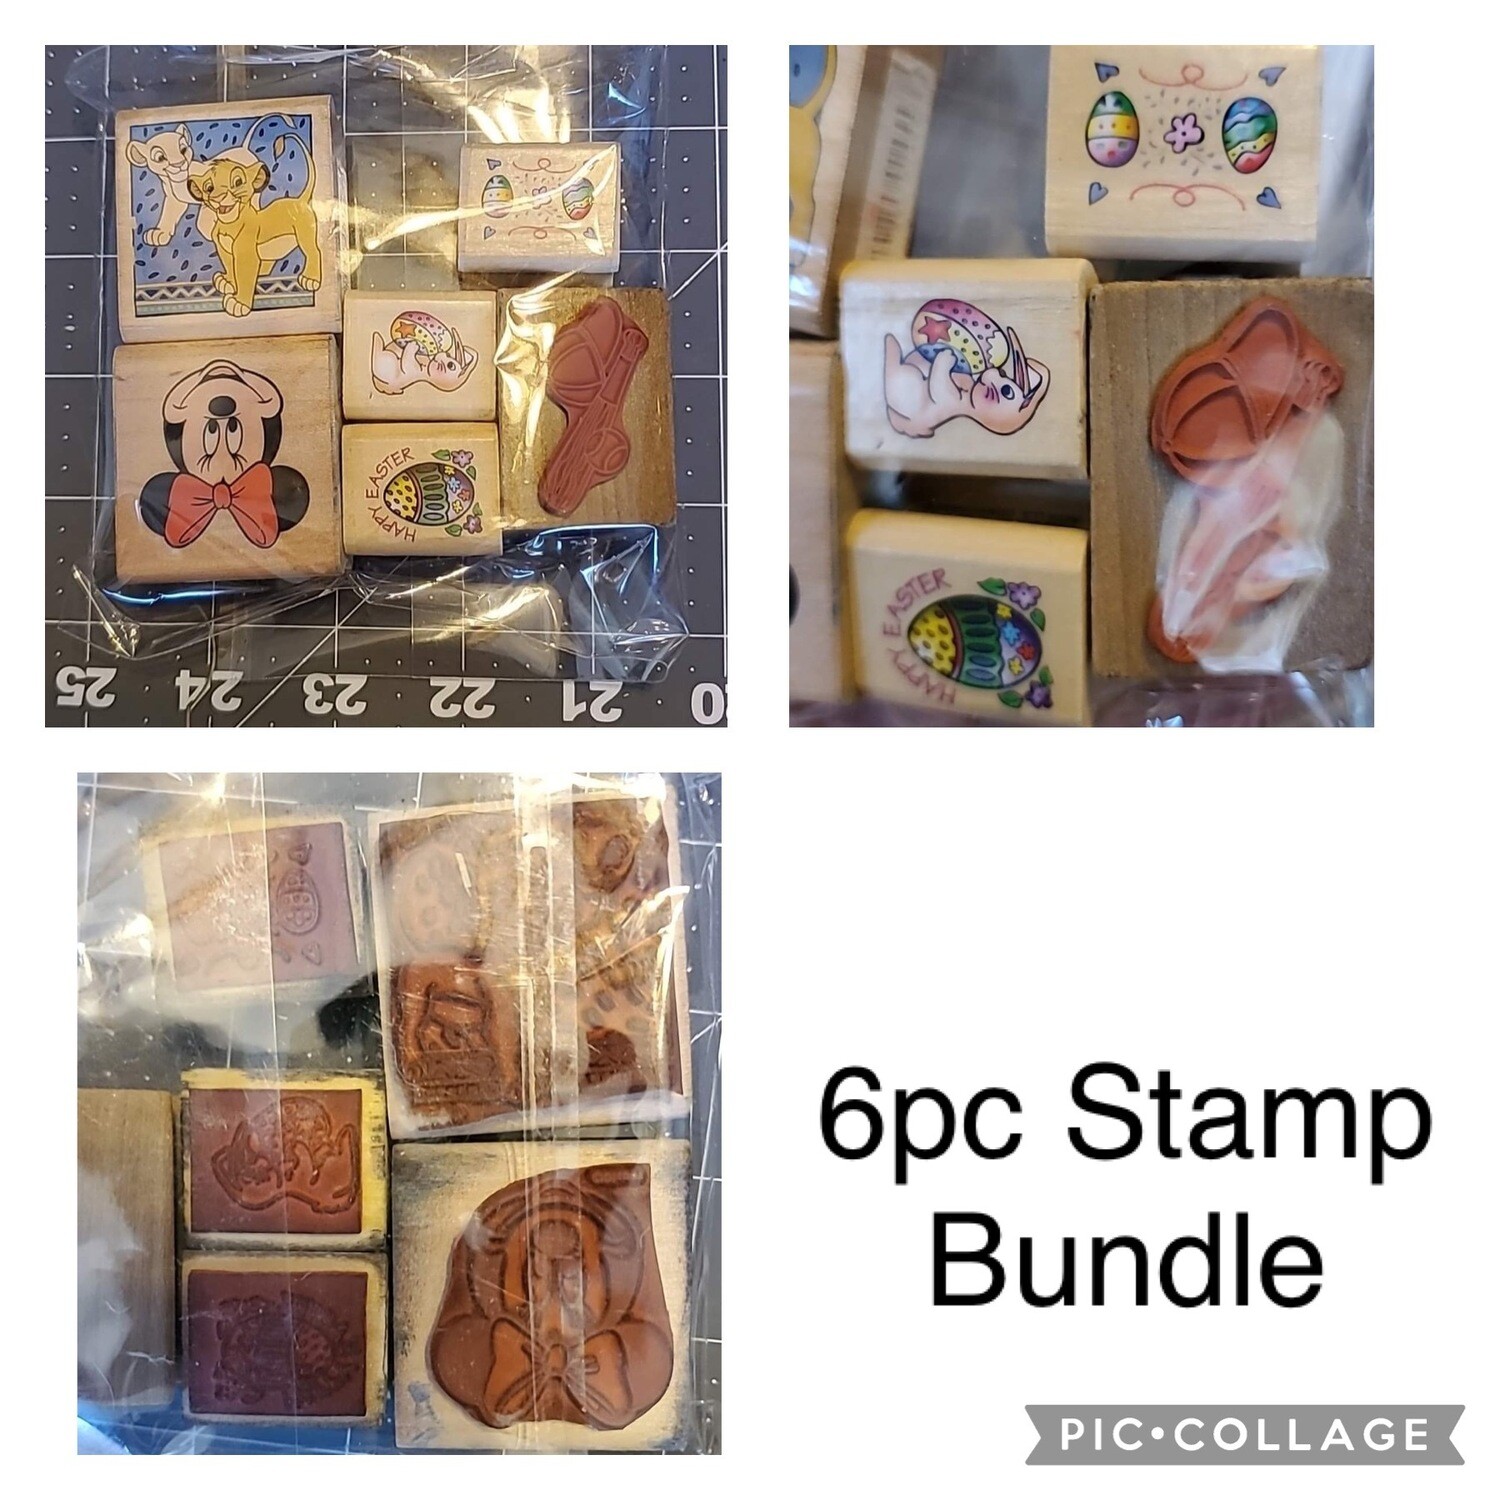 6pc Stamp Bundle